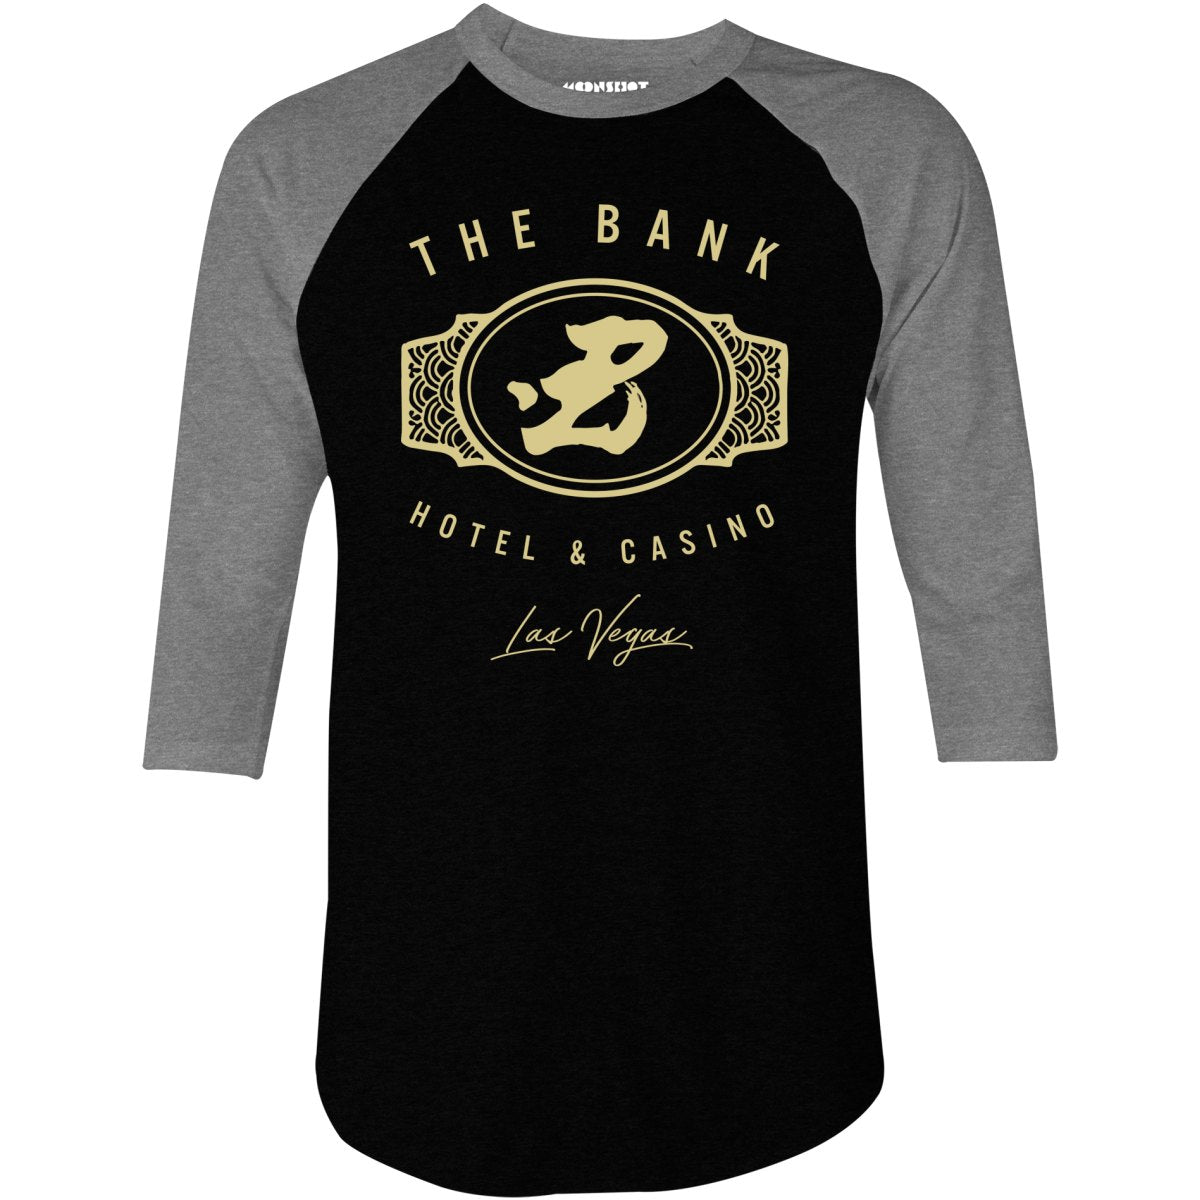 The Bank Hotel & Casino - Ocean's Thirteen - 3/4 Sleeve Raglan T-Shirt